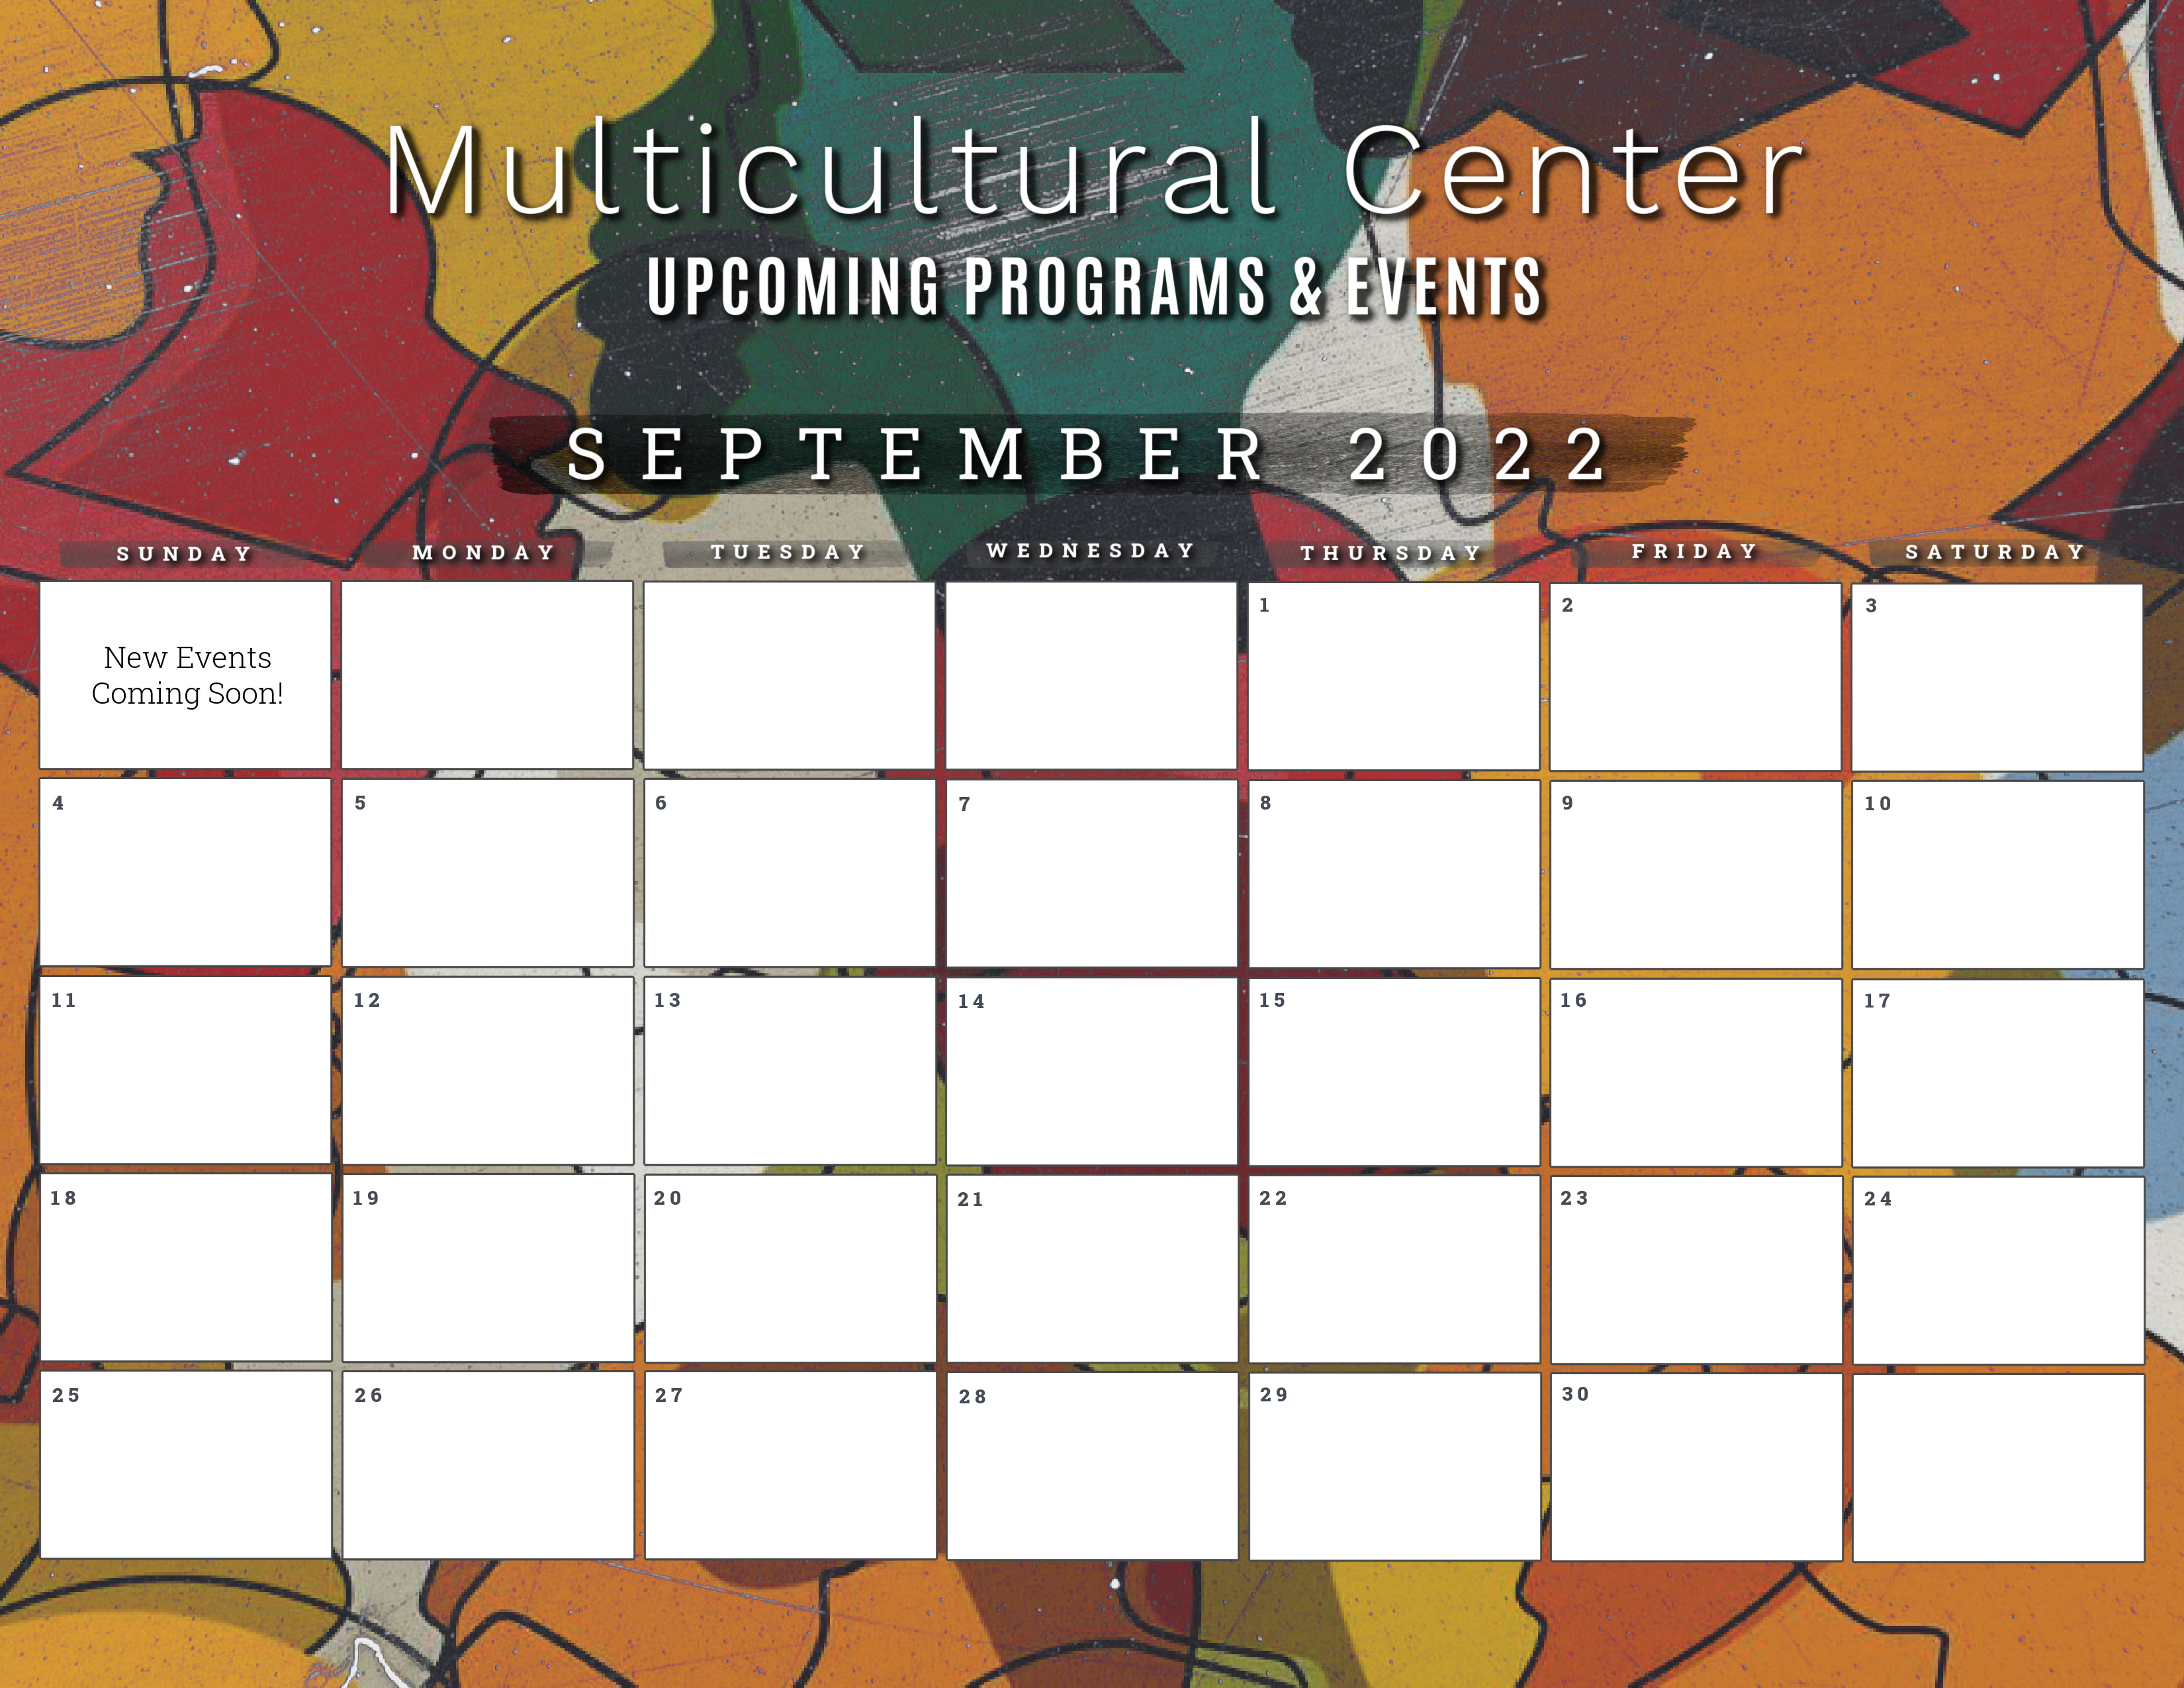 MERC Events Calendar September 2022, reads NEW EVENTS COMING SOON